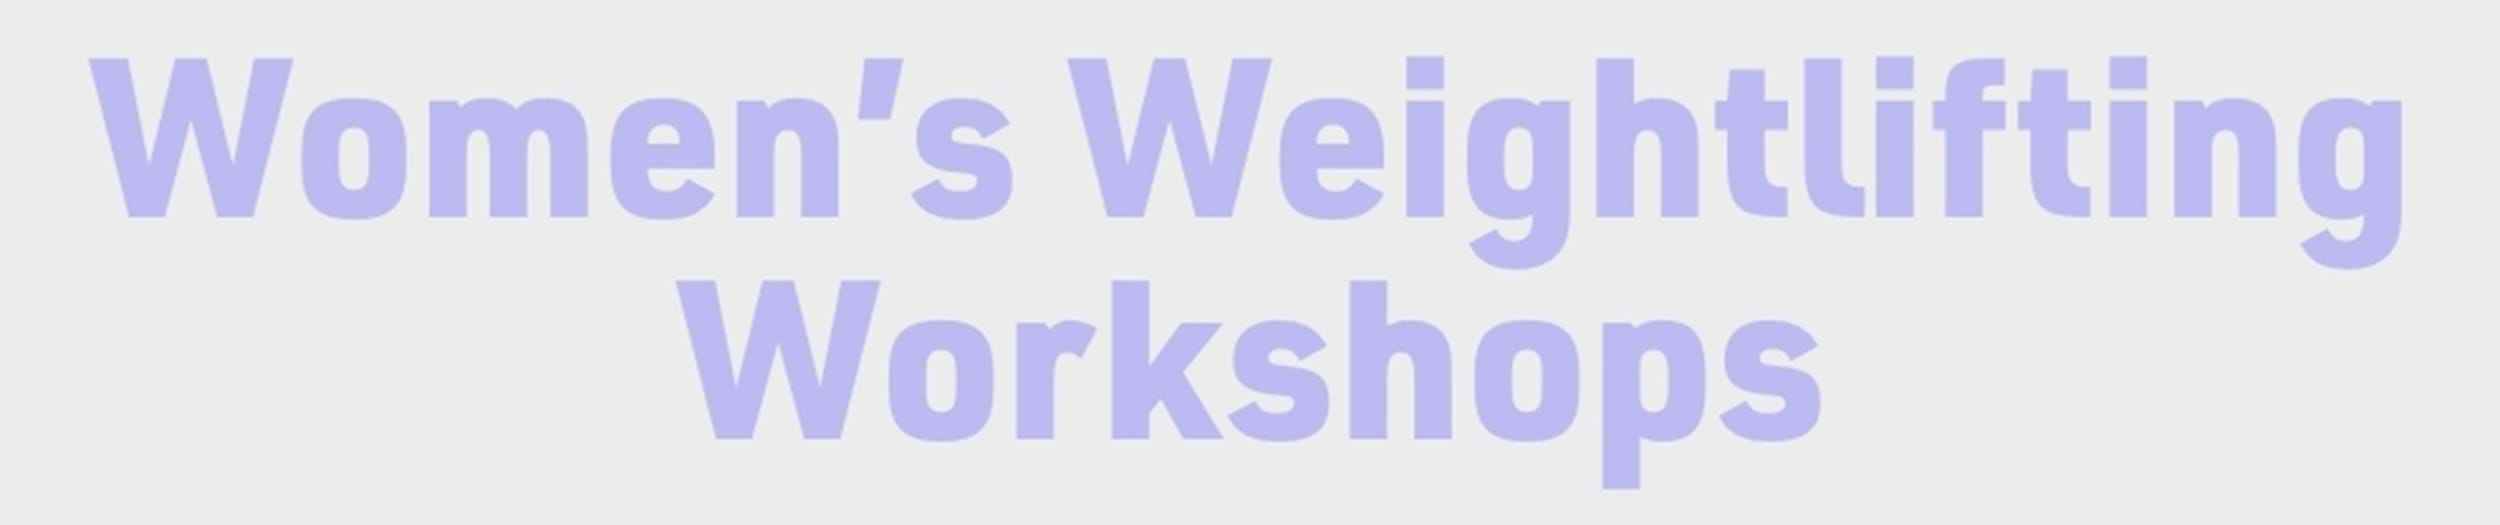 Women's weightlifting workshops